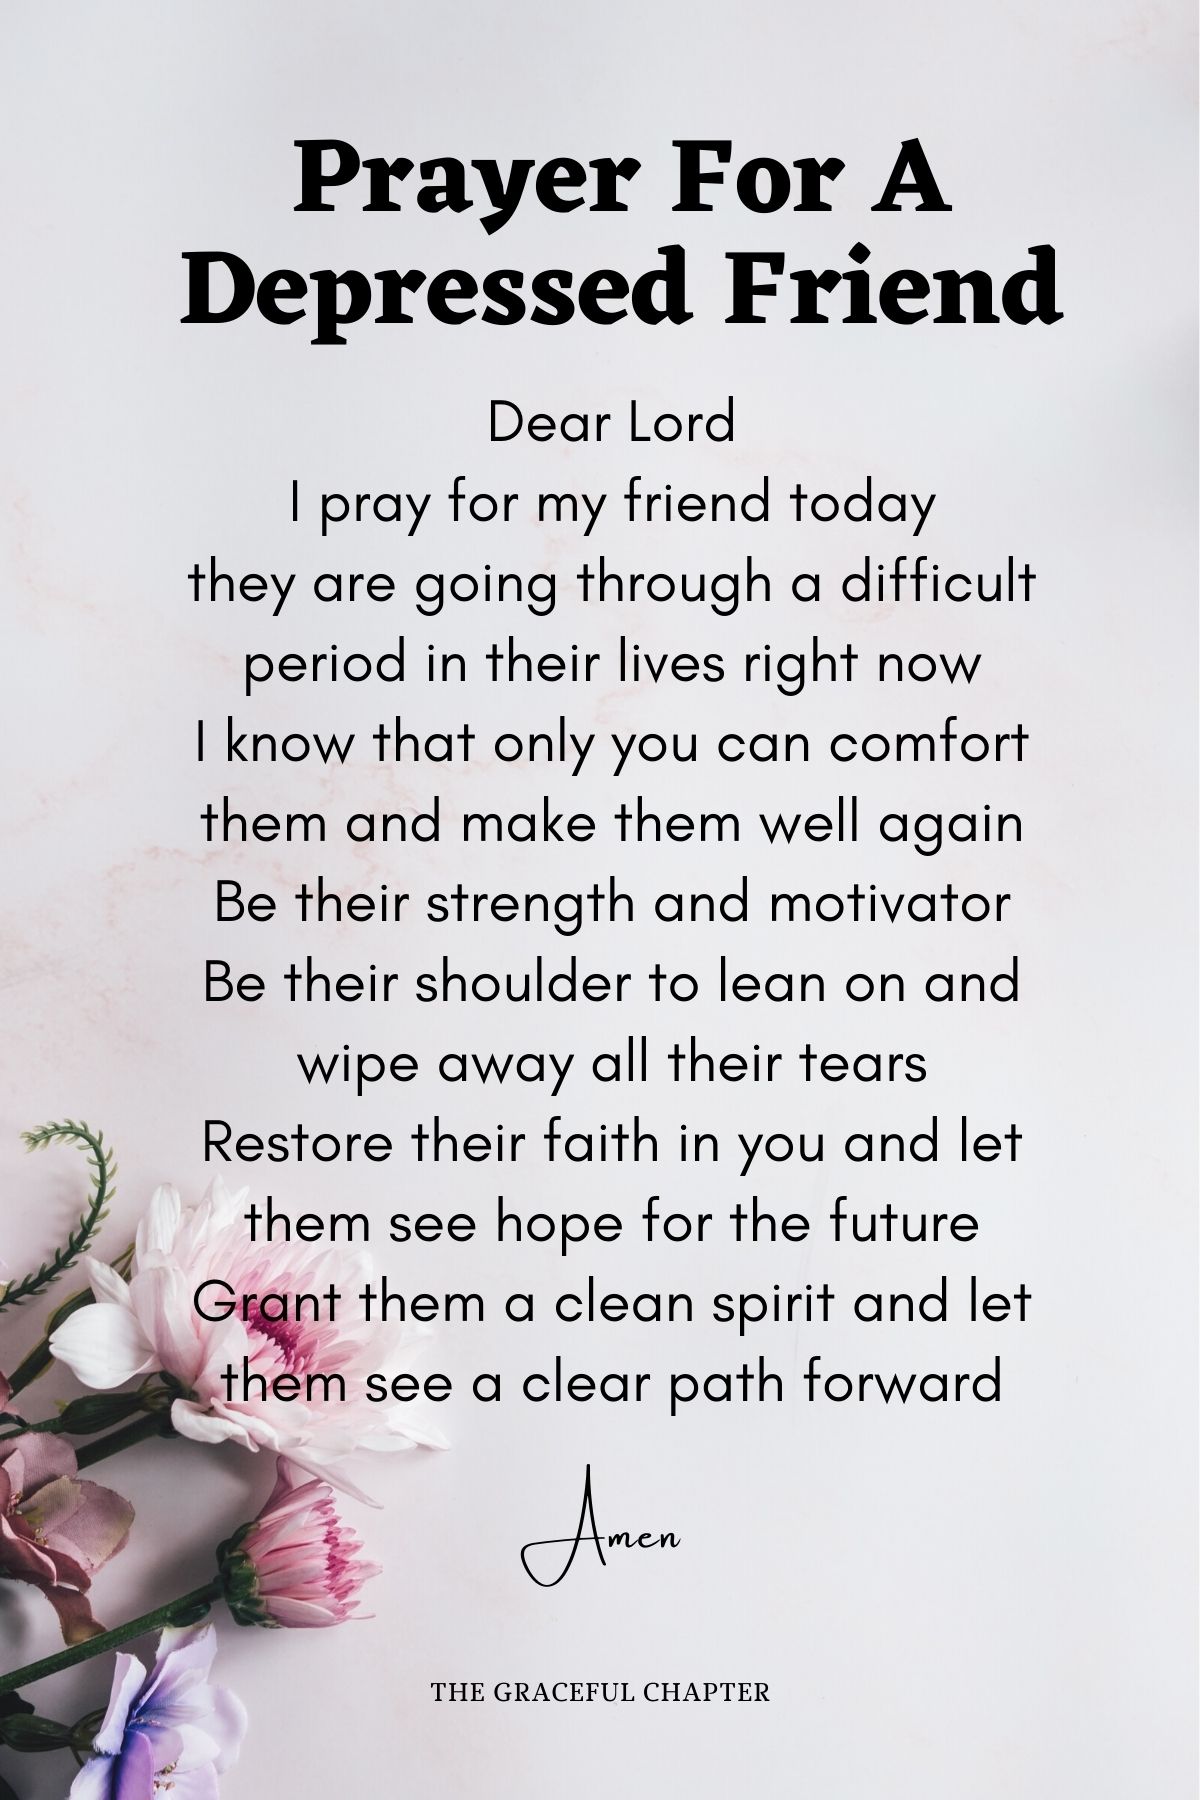 Prayer for a depressed friend